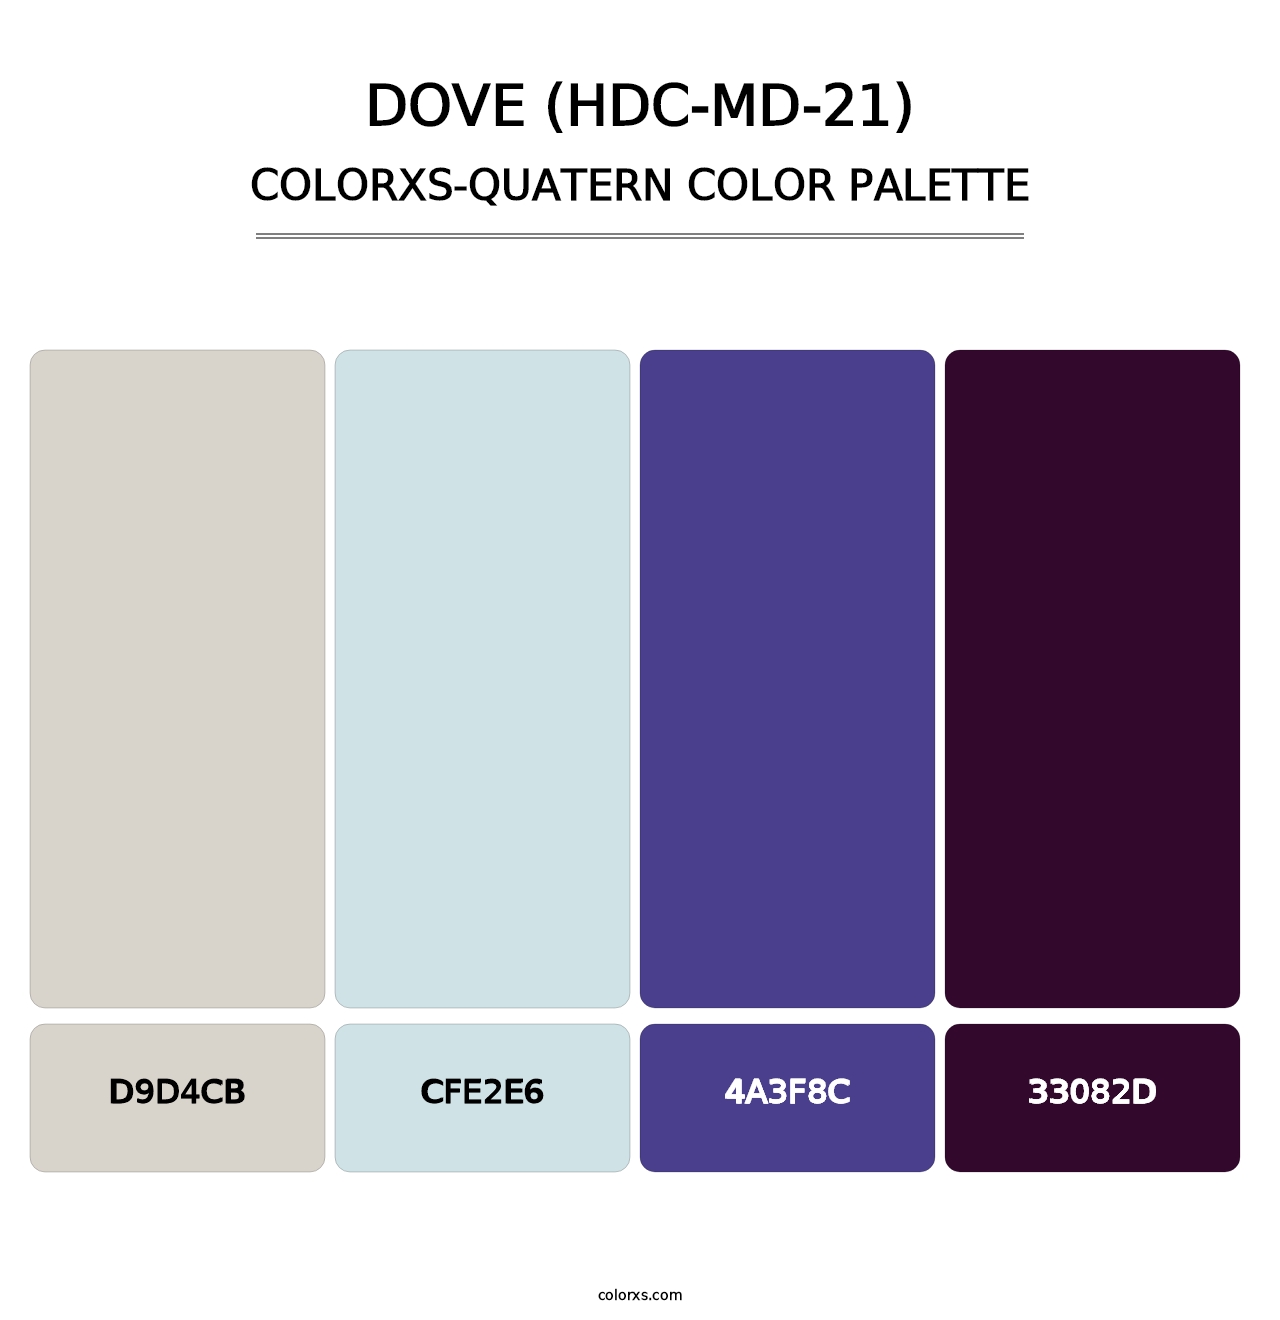 Dove (HDC-MD-21) - Colorxs Quatern Palette